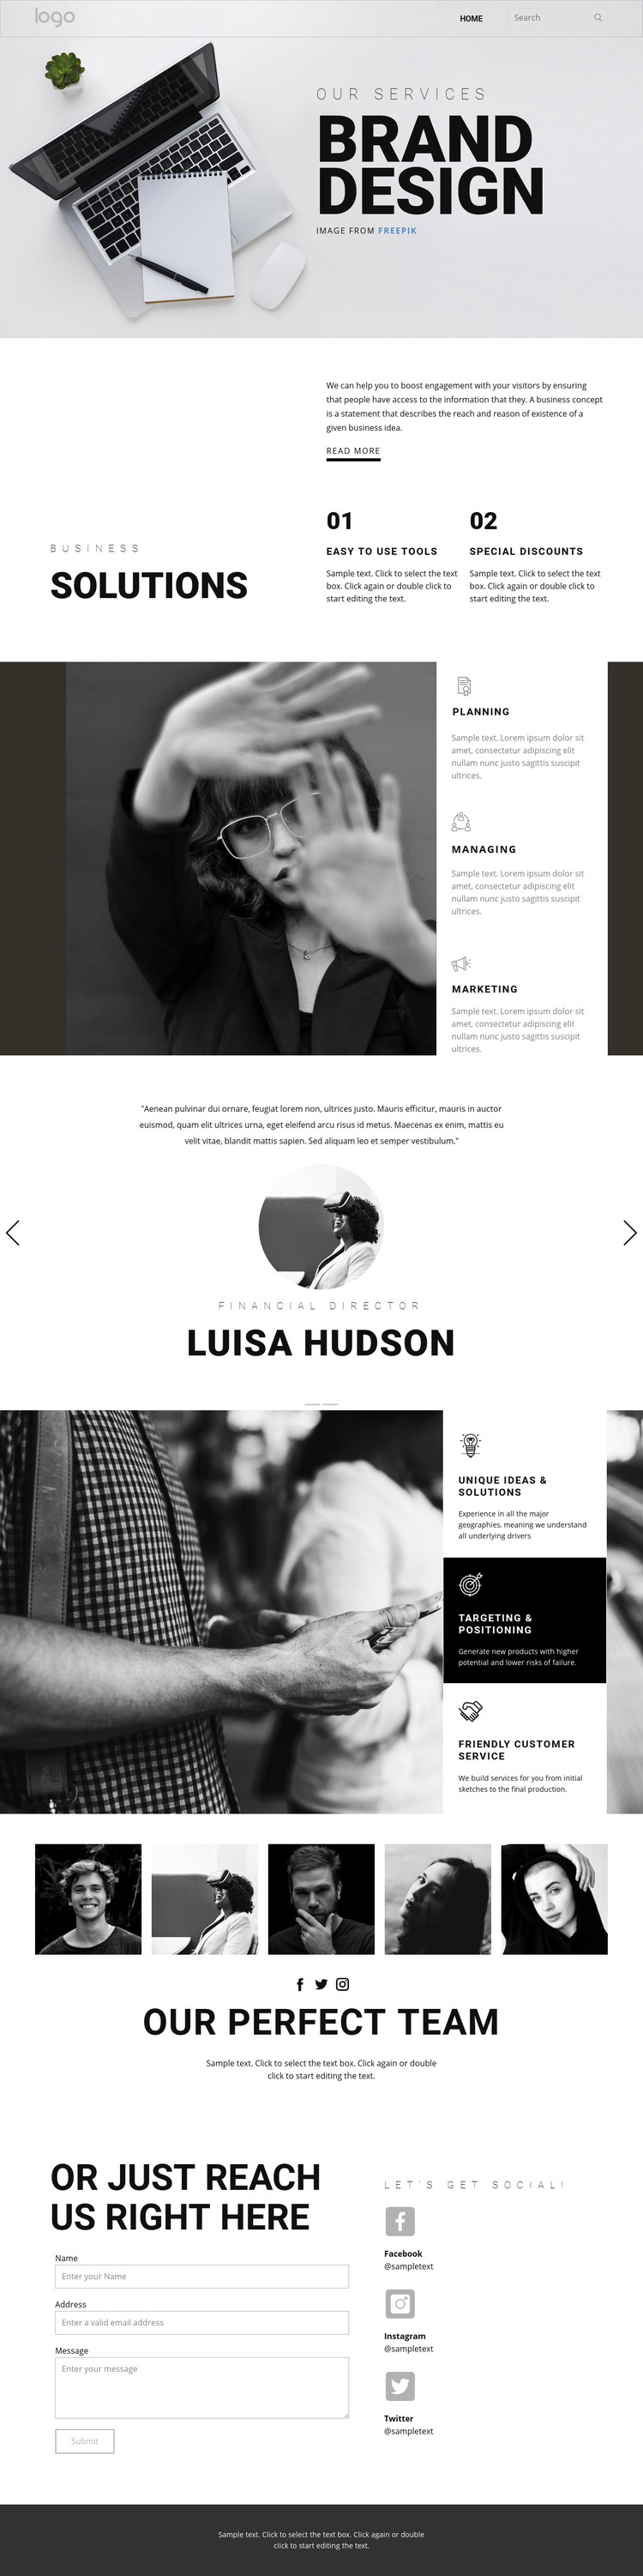 Doing branding for business Homepage Design